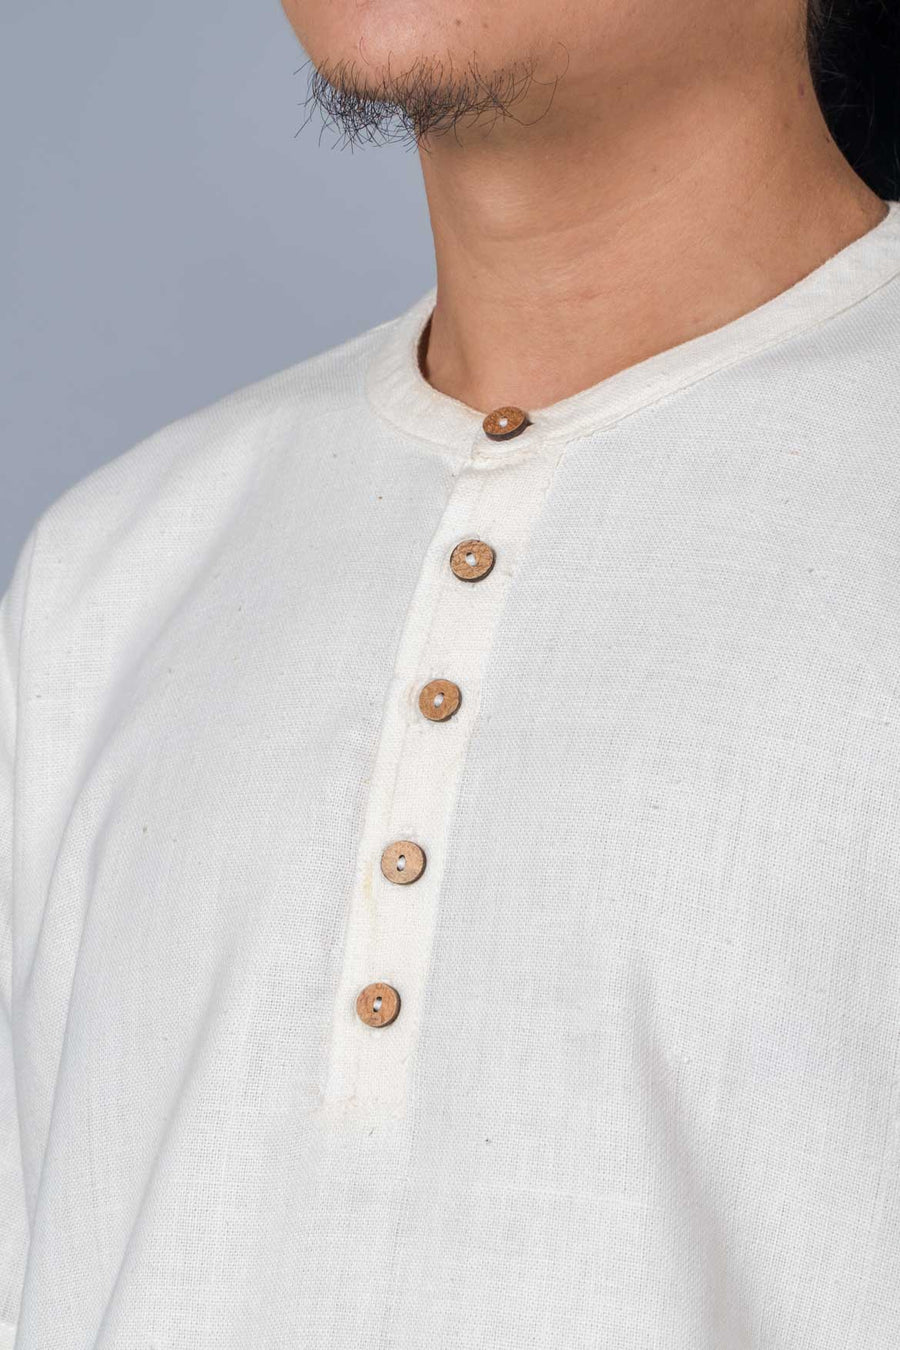 Off-White handwoven Shirt- MANAV - Upasana Design Studio